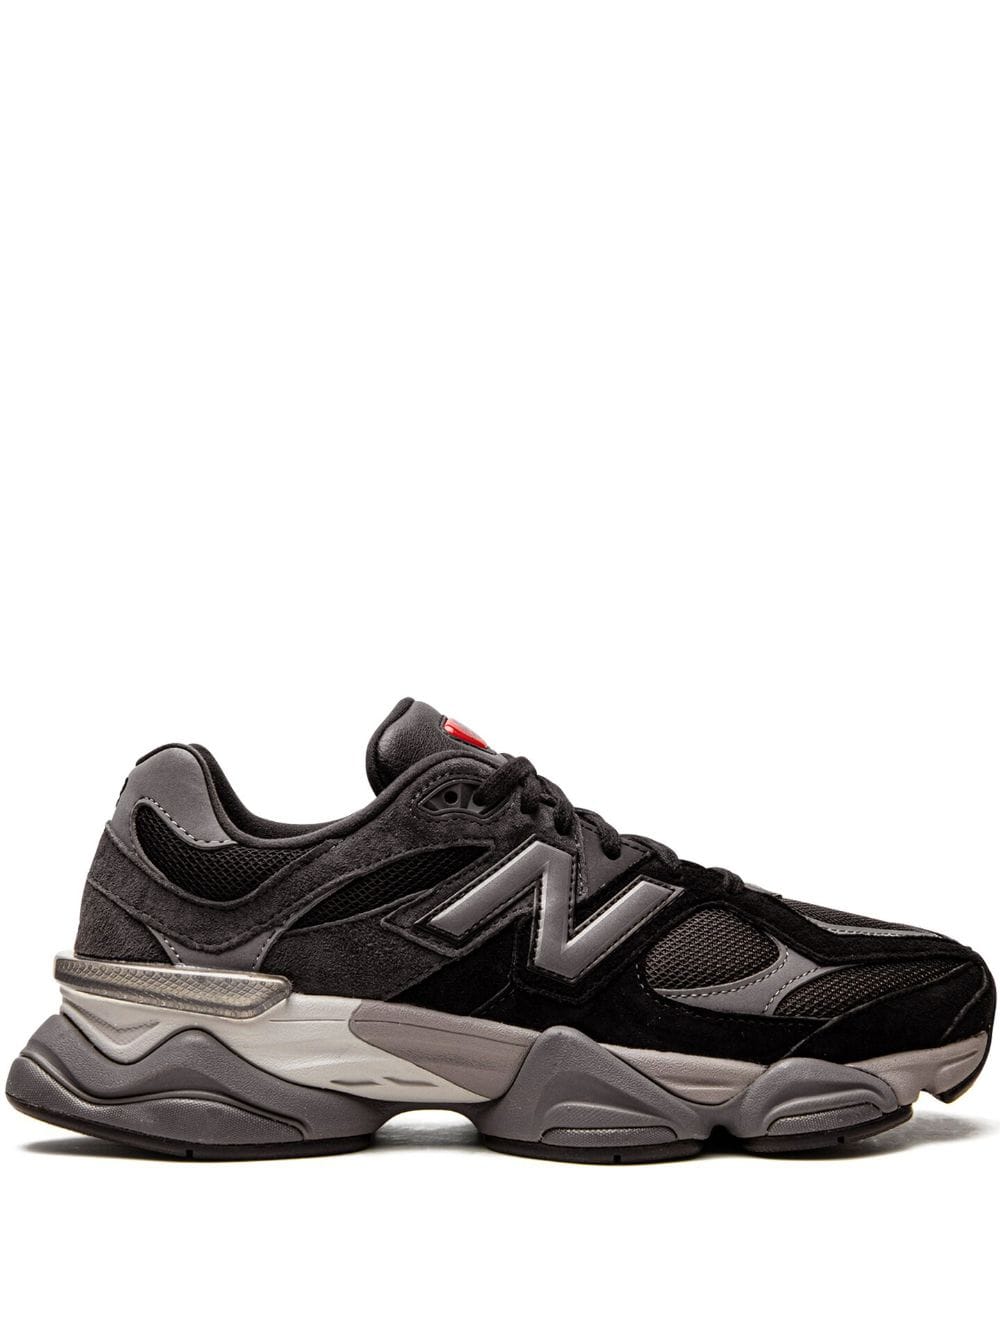 New Balance 9060 "Black/Castlerock" sneakers